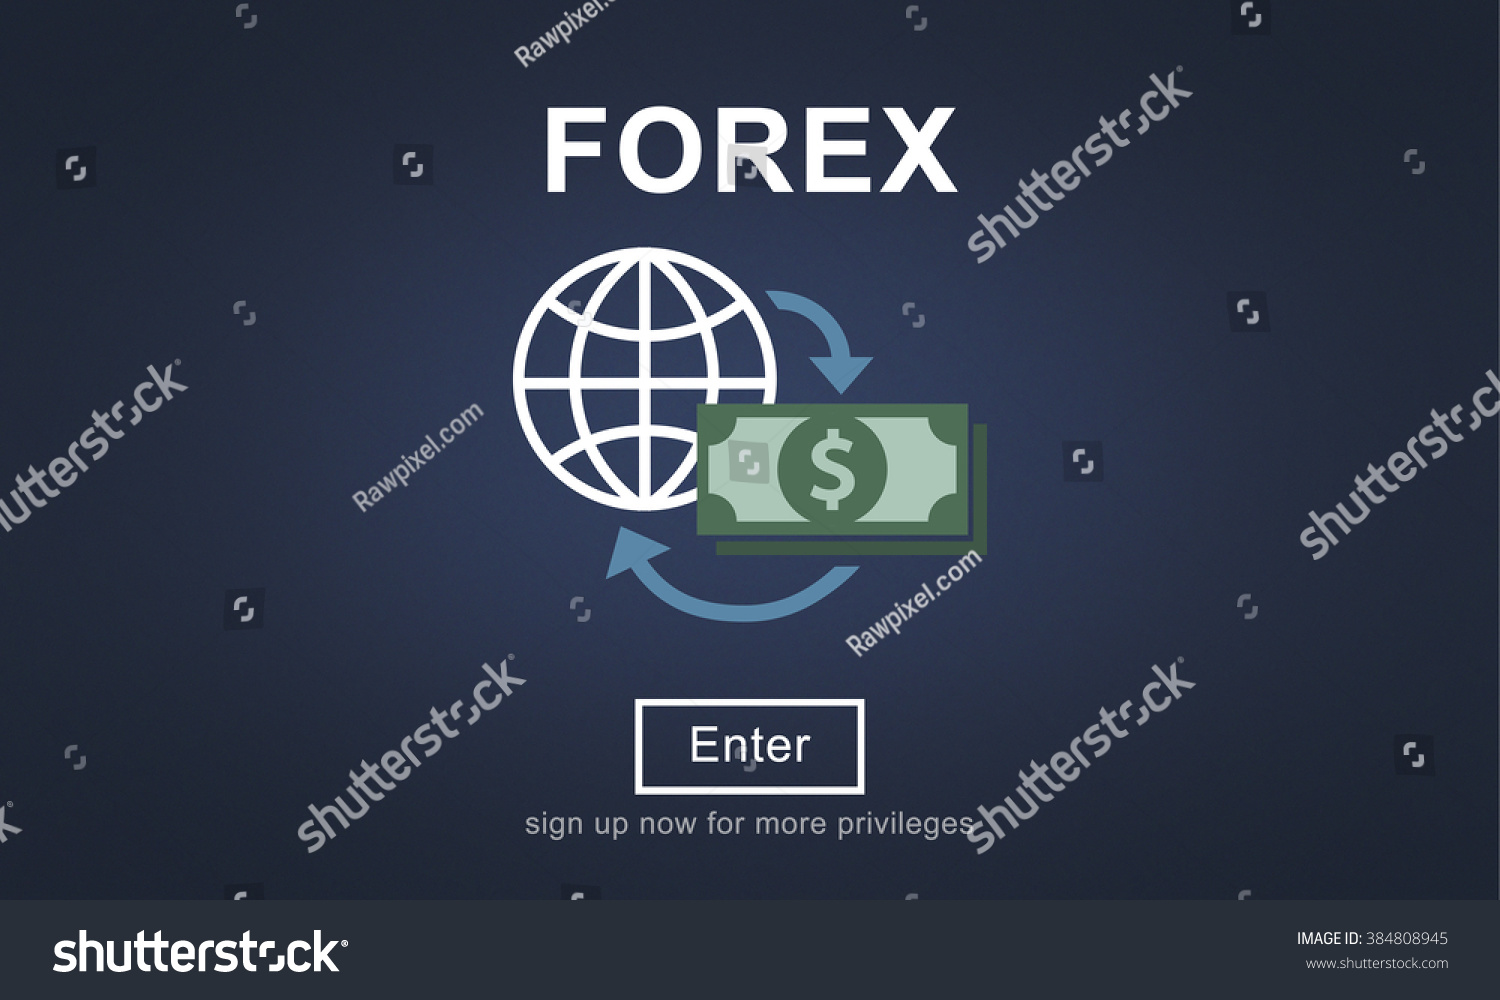 Forex Banking Stock Market Finance Online Stock Illustration - 